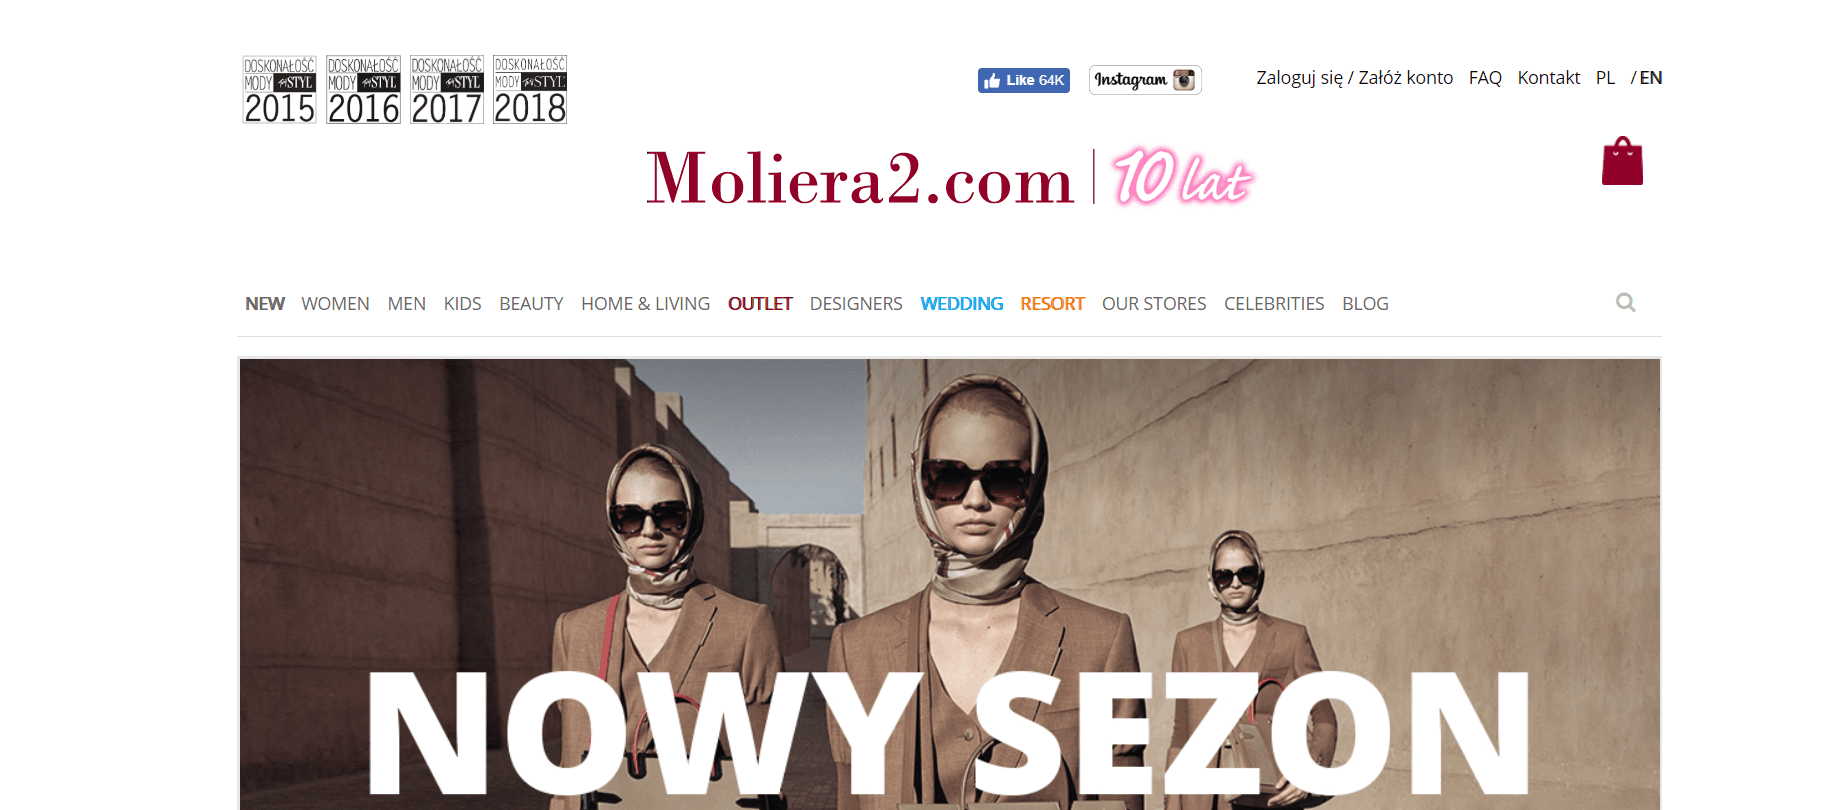 Moliera2 купити онлайн з доставкою в Україну - Meest Shopping - 2